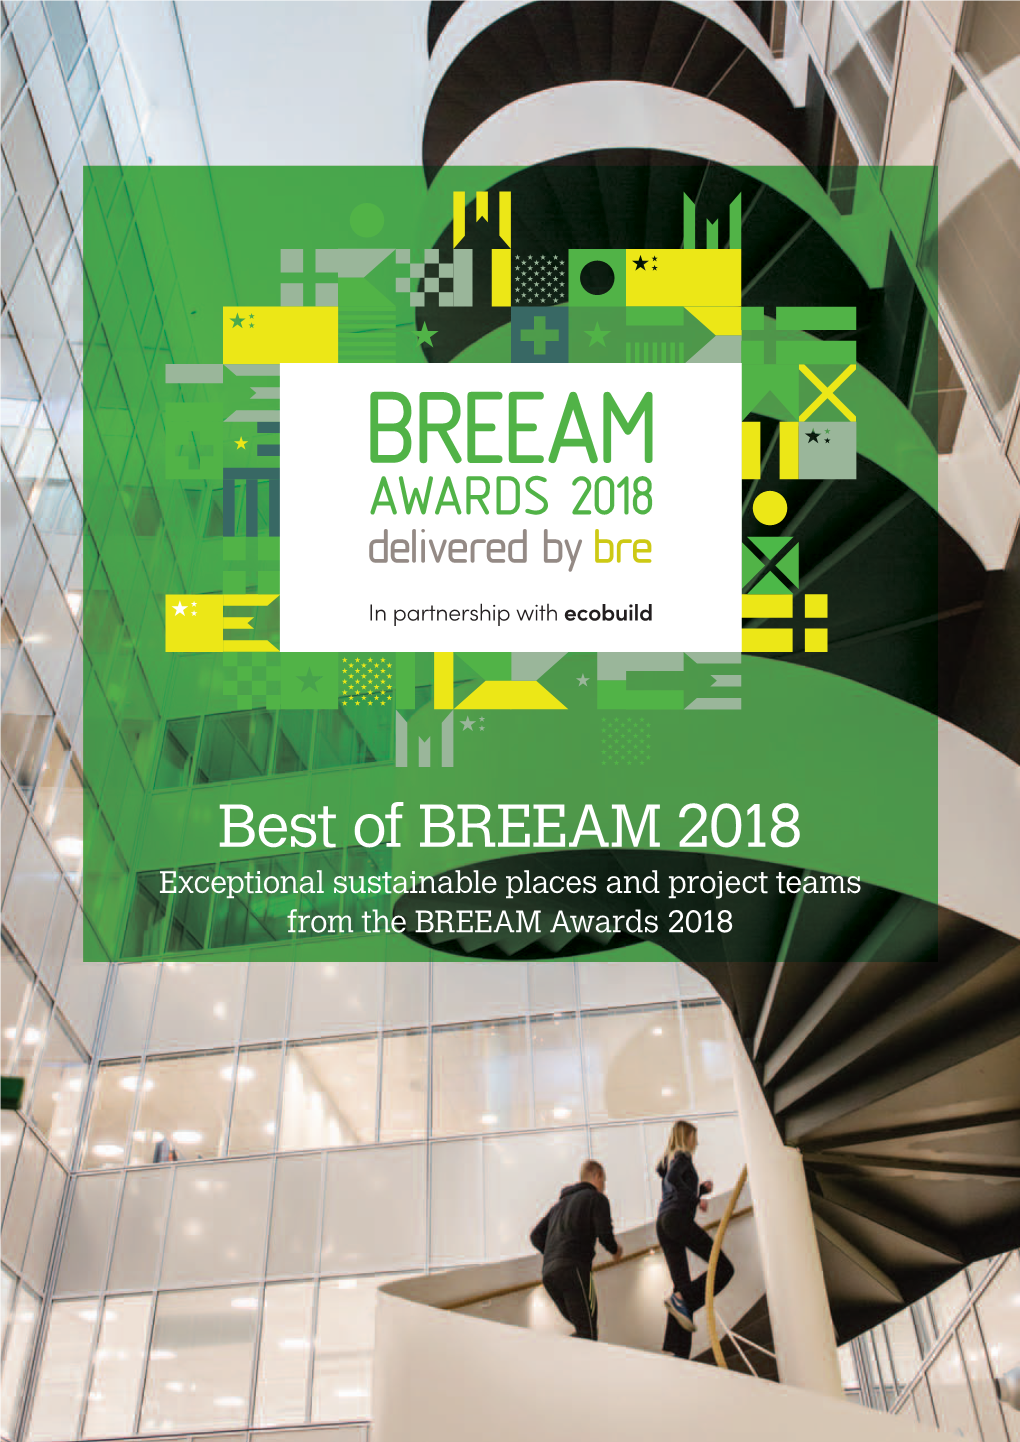 BREEAM Awards 2018 2 Welcome to the BREEAM Awards 2018